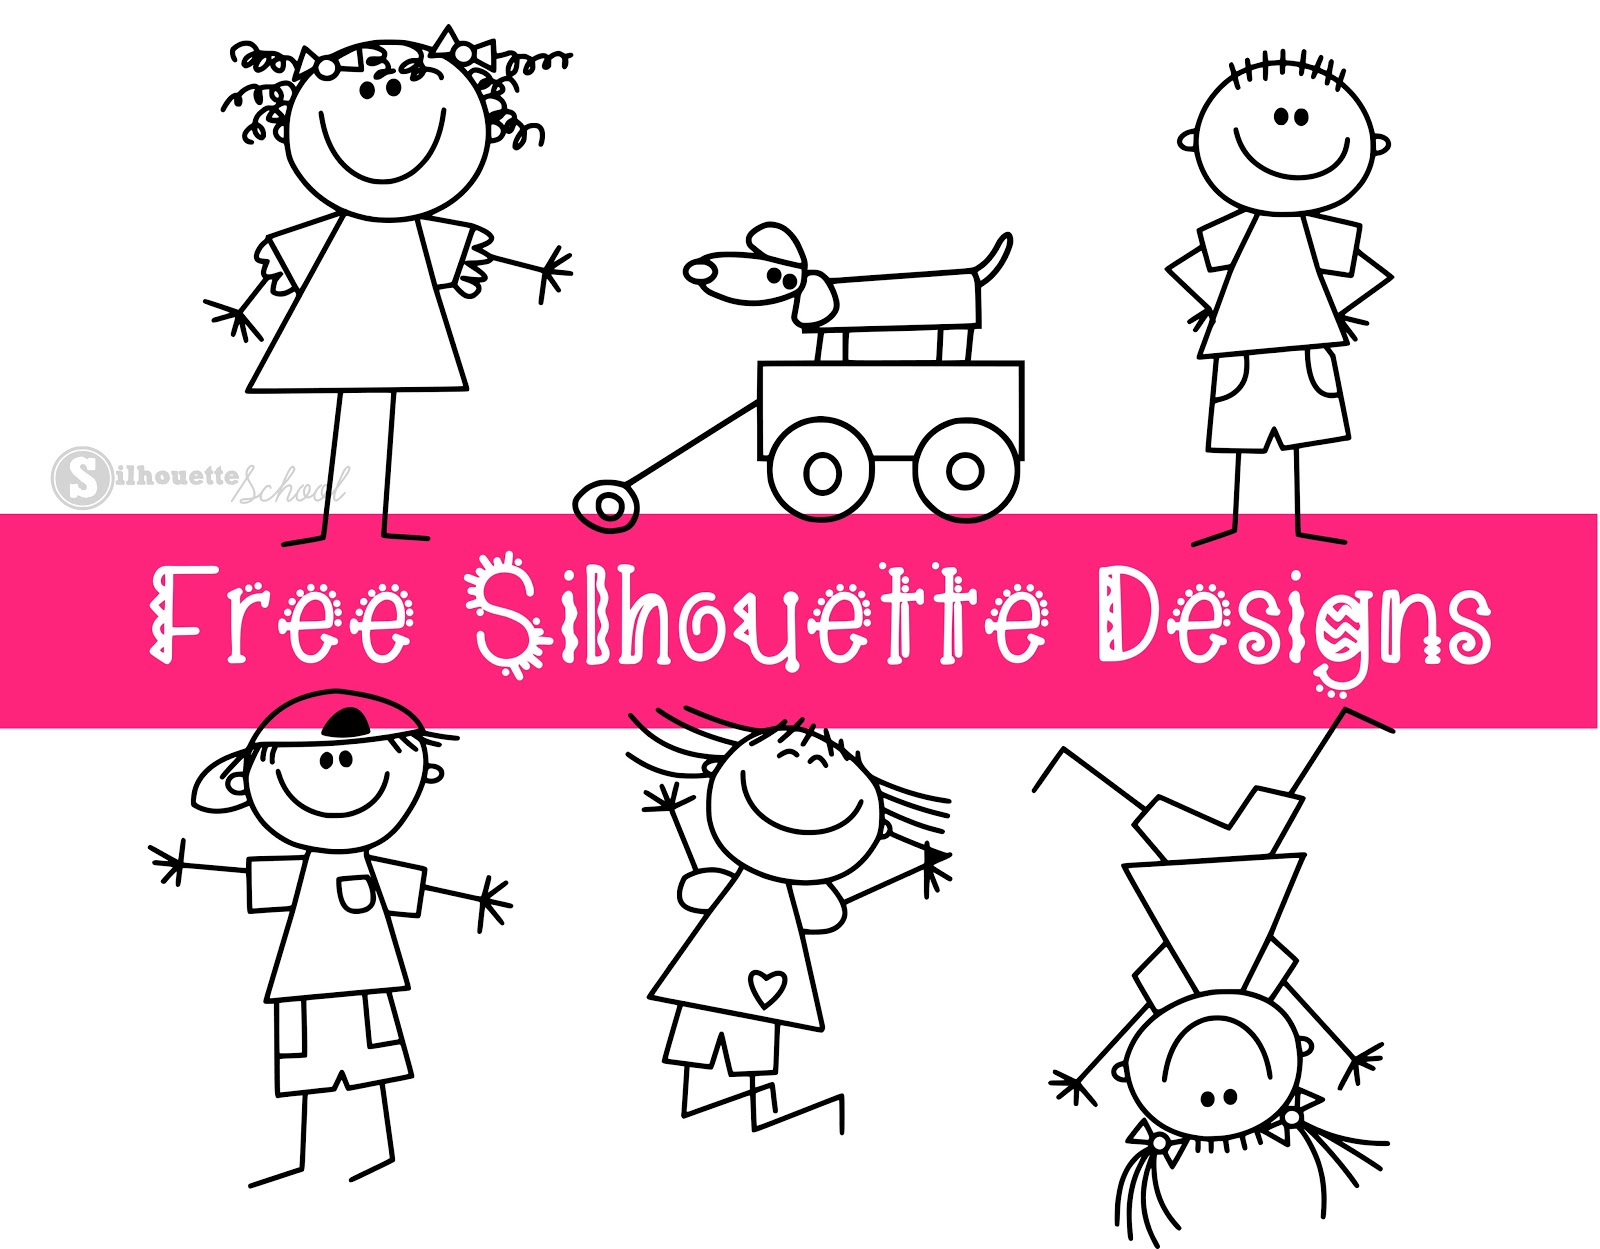 Download Stick People Design Set: Free Silhouette Designs ...